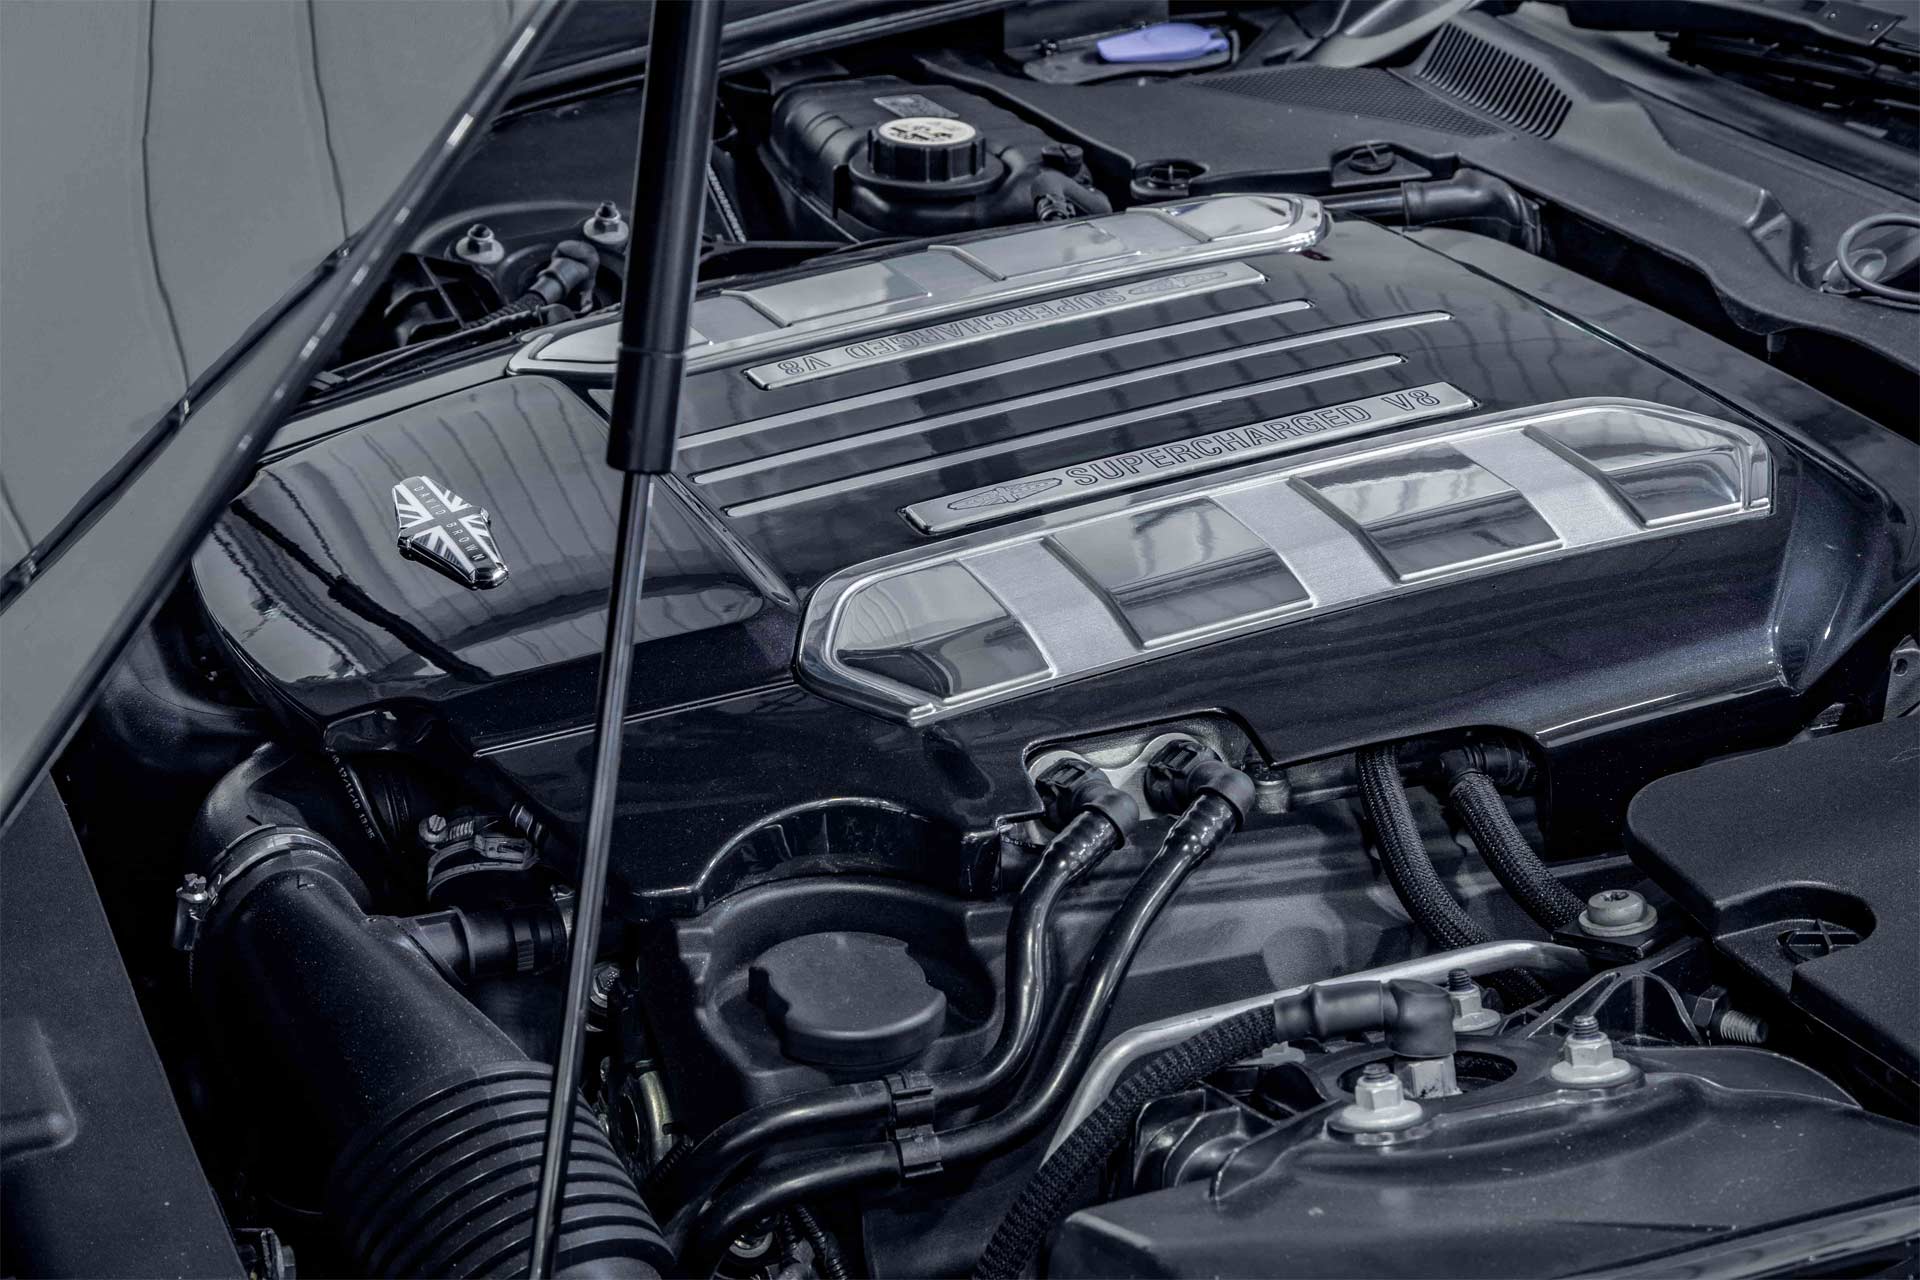 David-Brown-Speedback-Silverstone-Edition-Supercharged-V8-engine